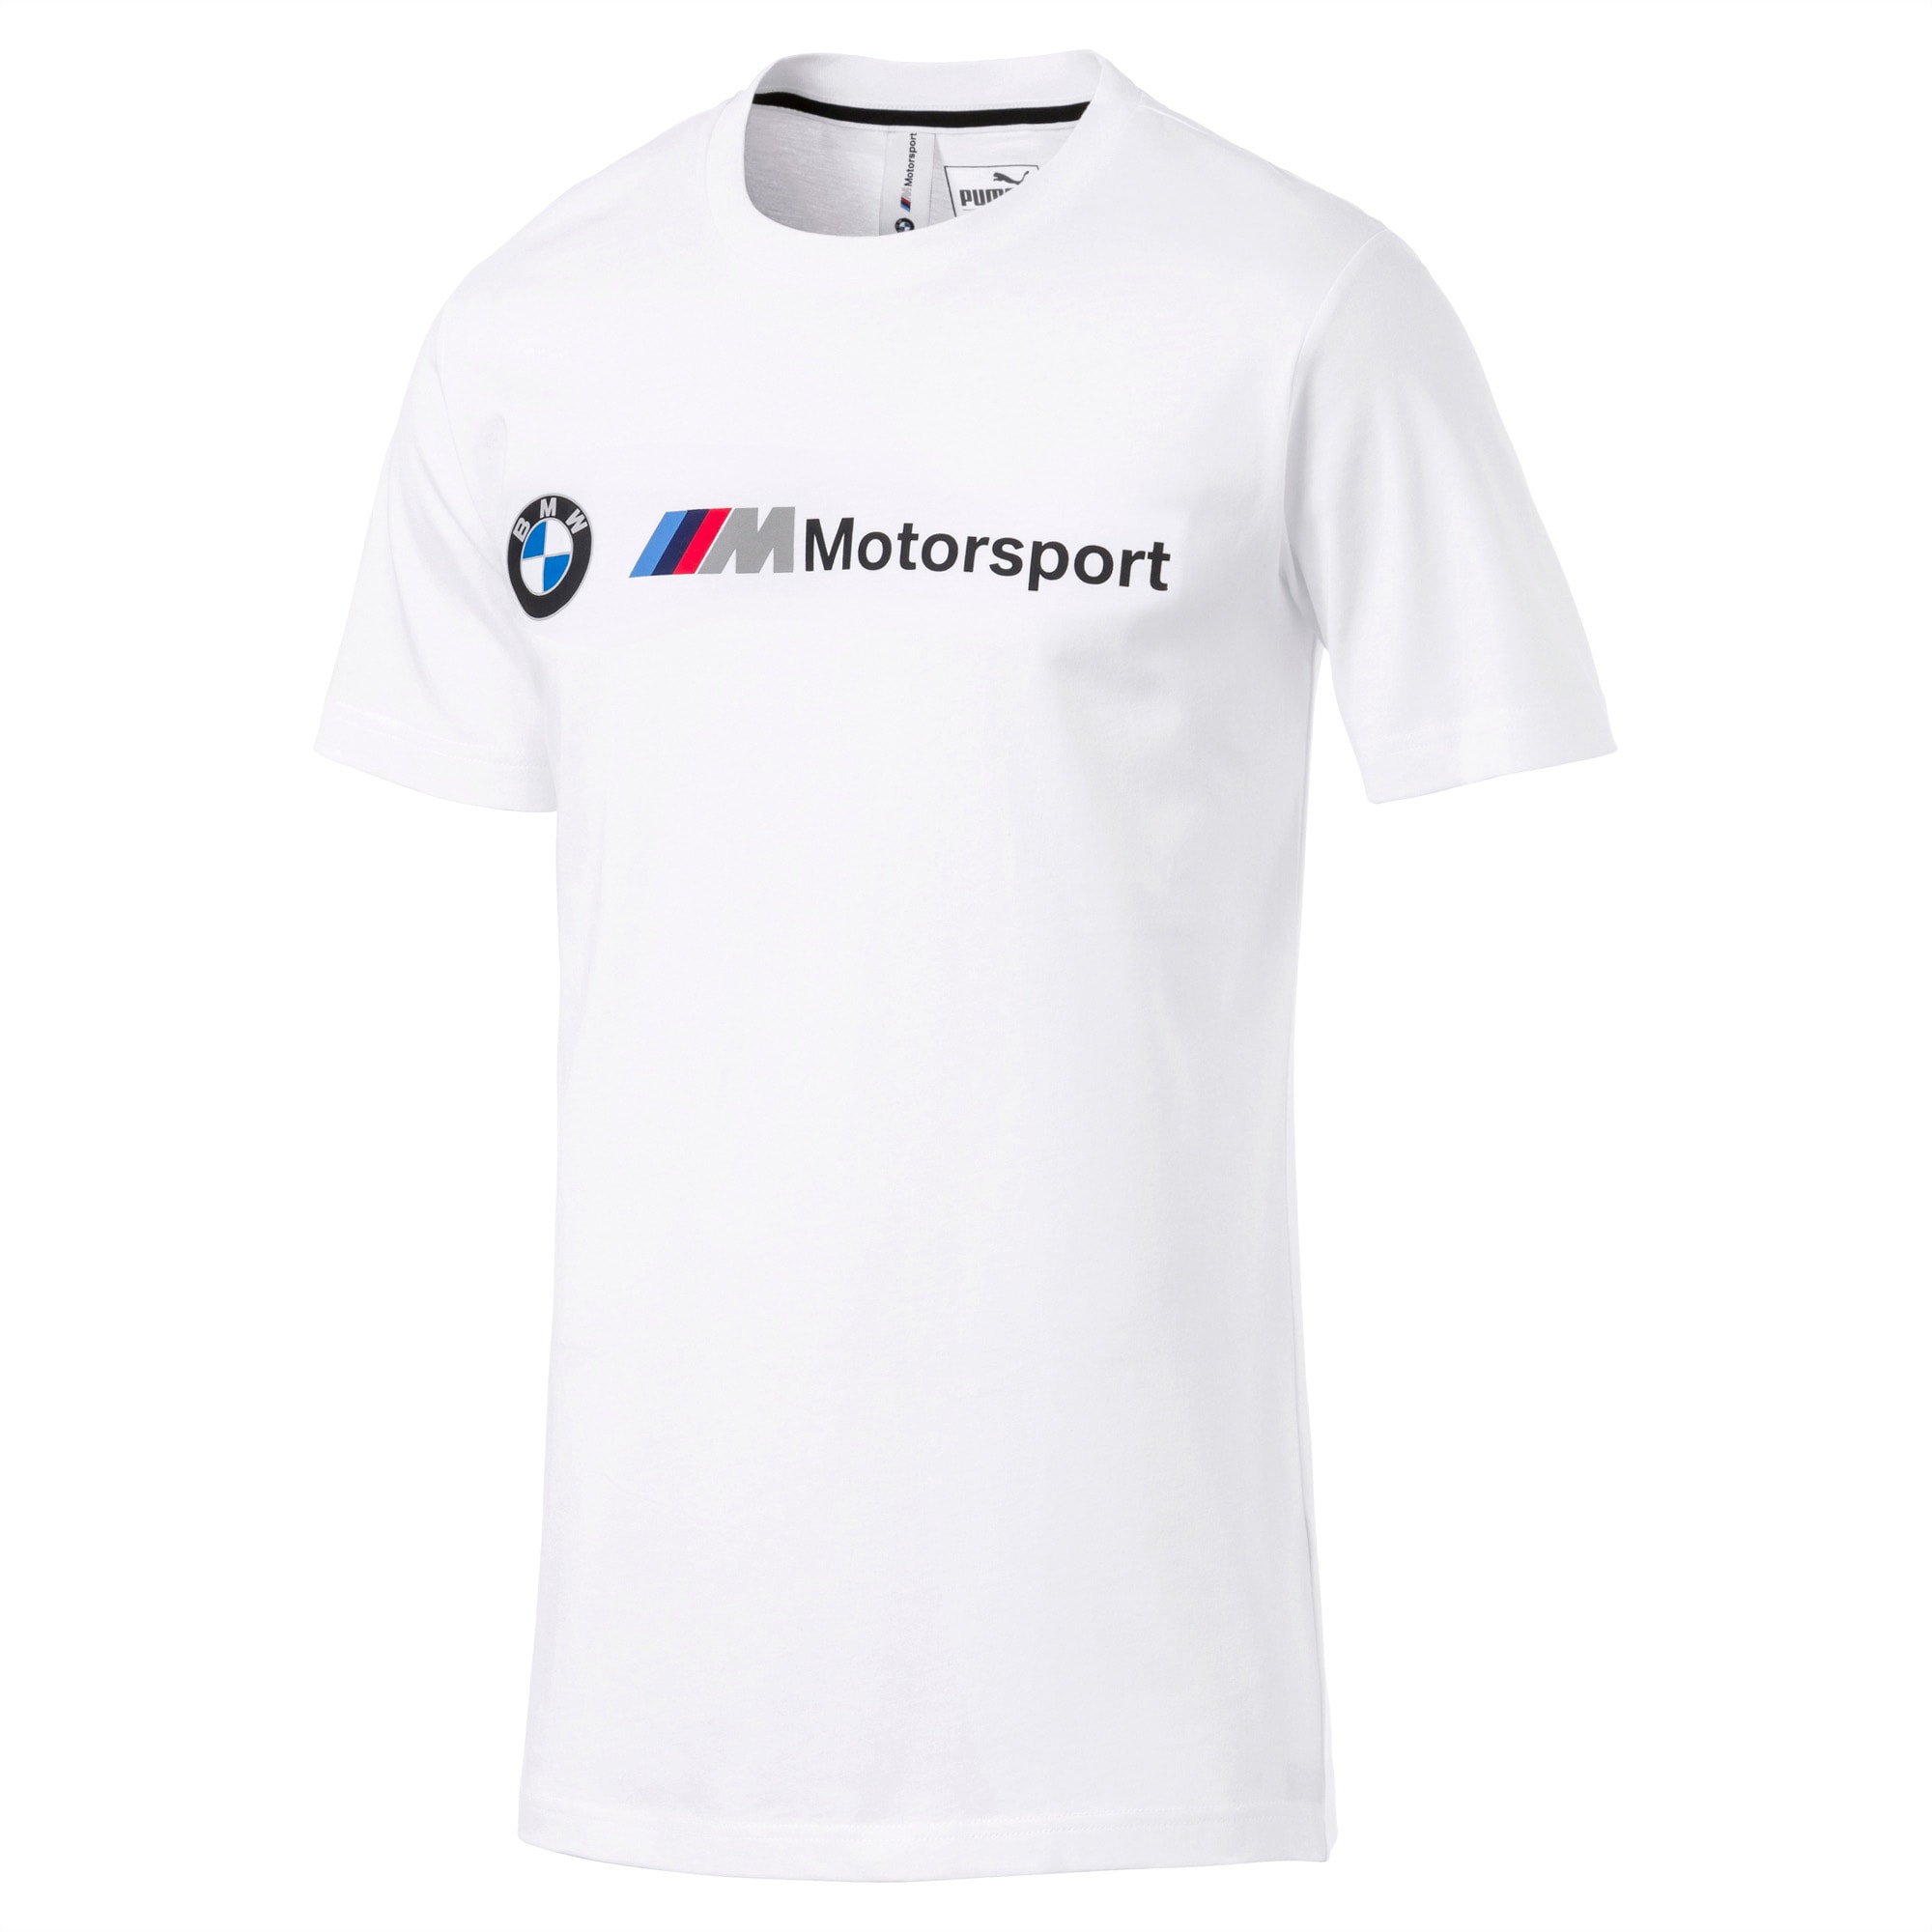 bmw m motorsport t shirt